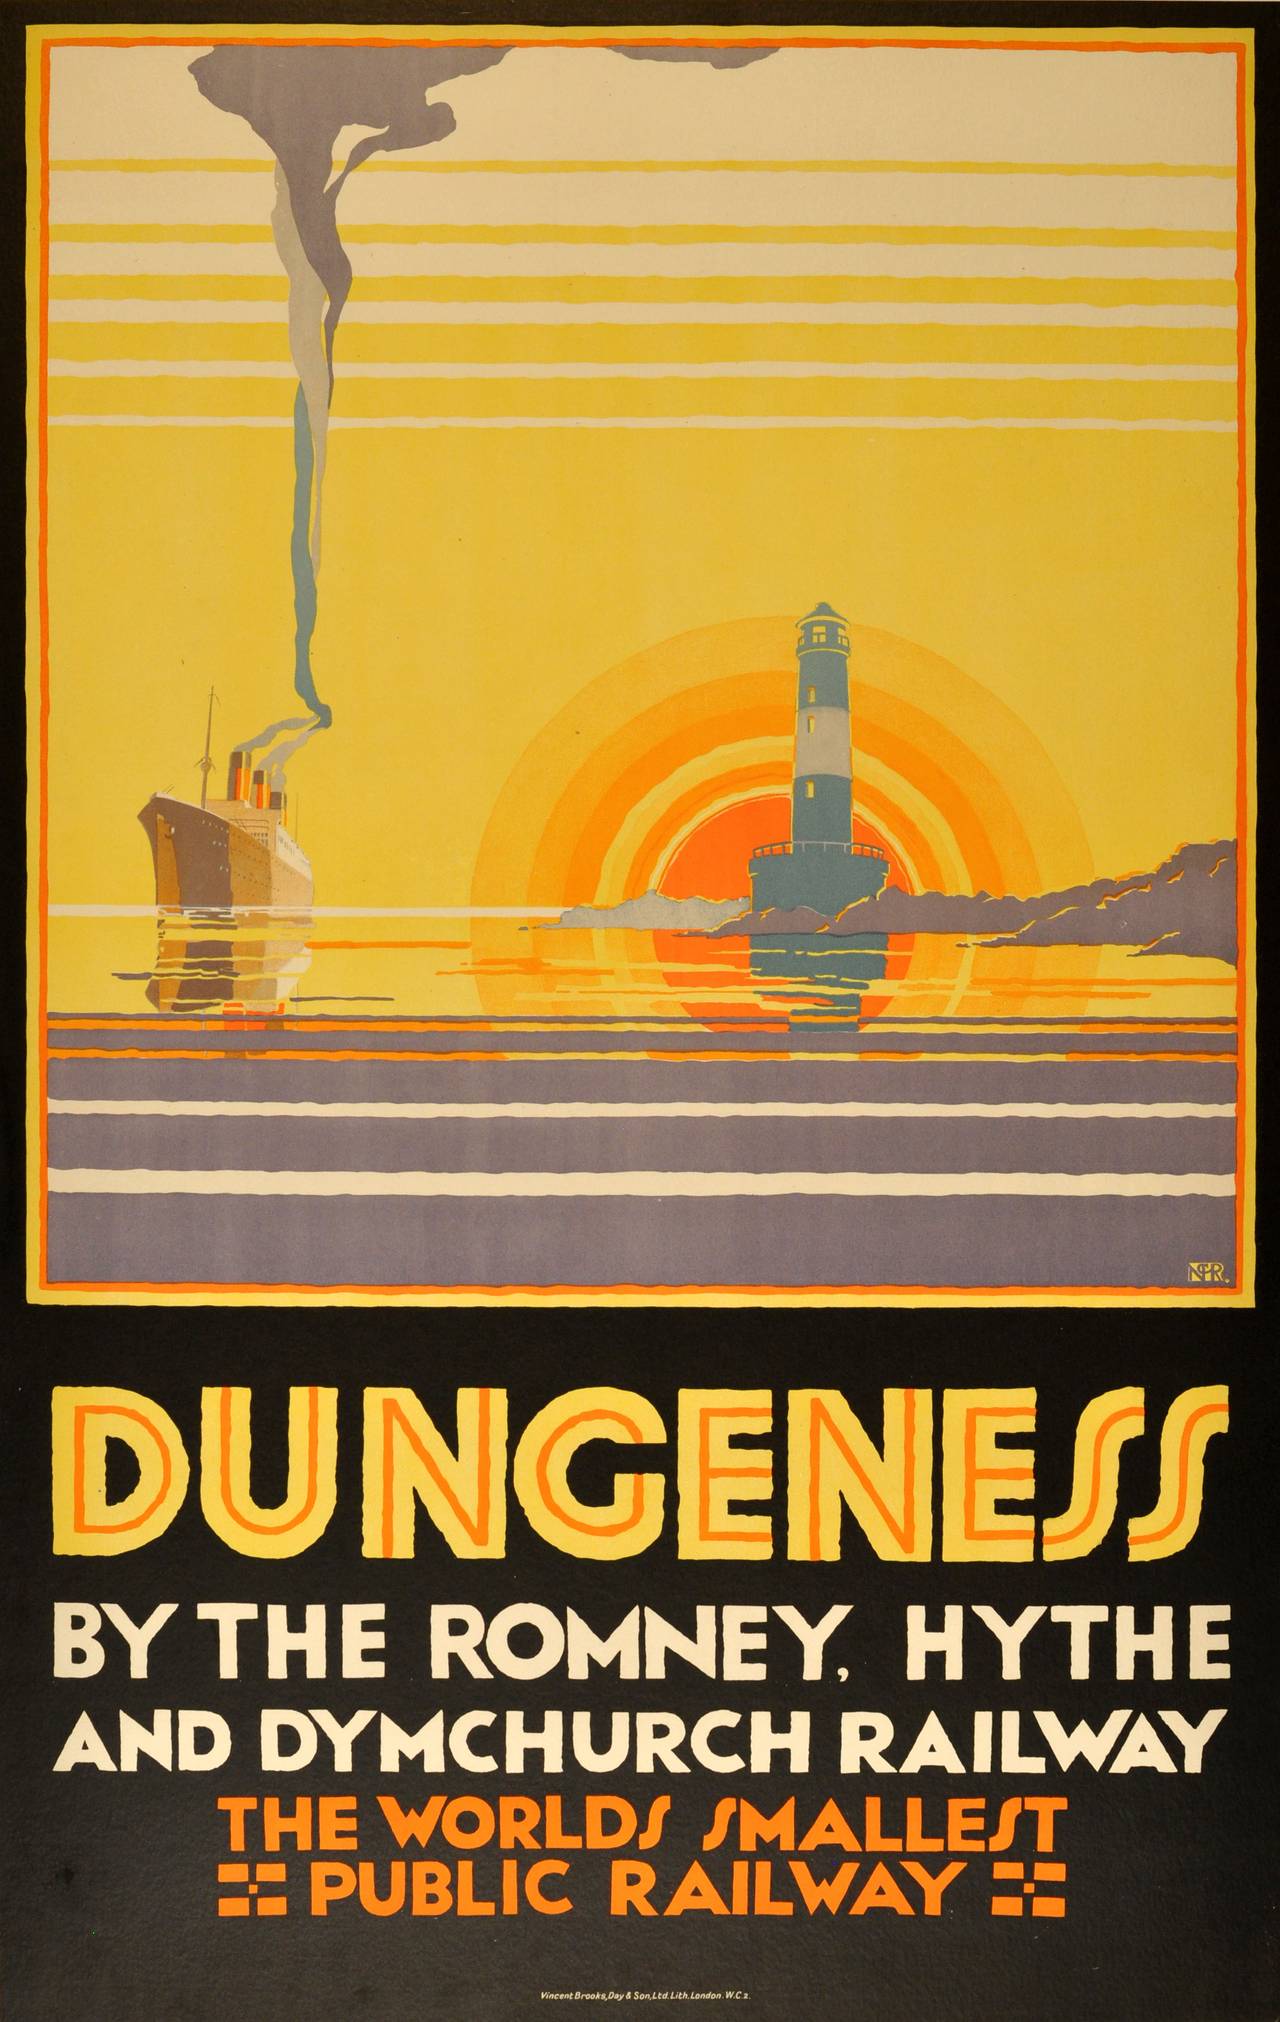 N. Cramer Roberts Print - Original Vintage Poster: Dungeness Kent By The Romney, Hythe & Dymchurch Railway